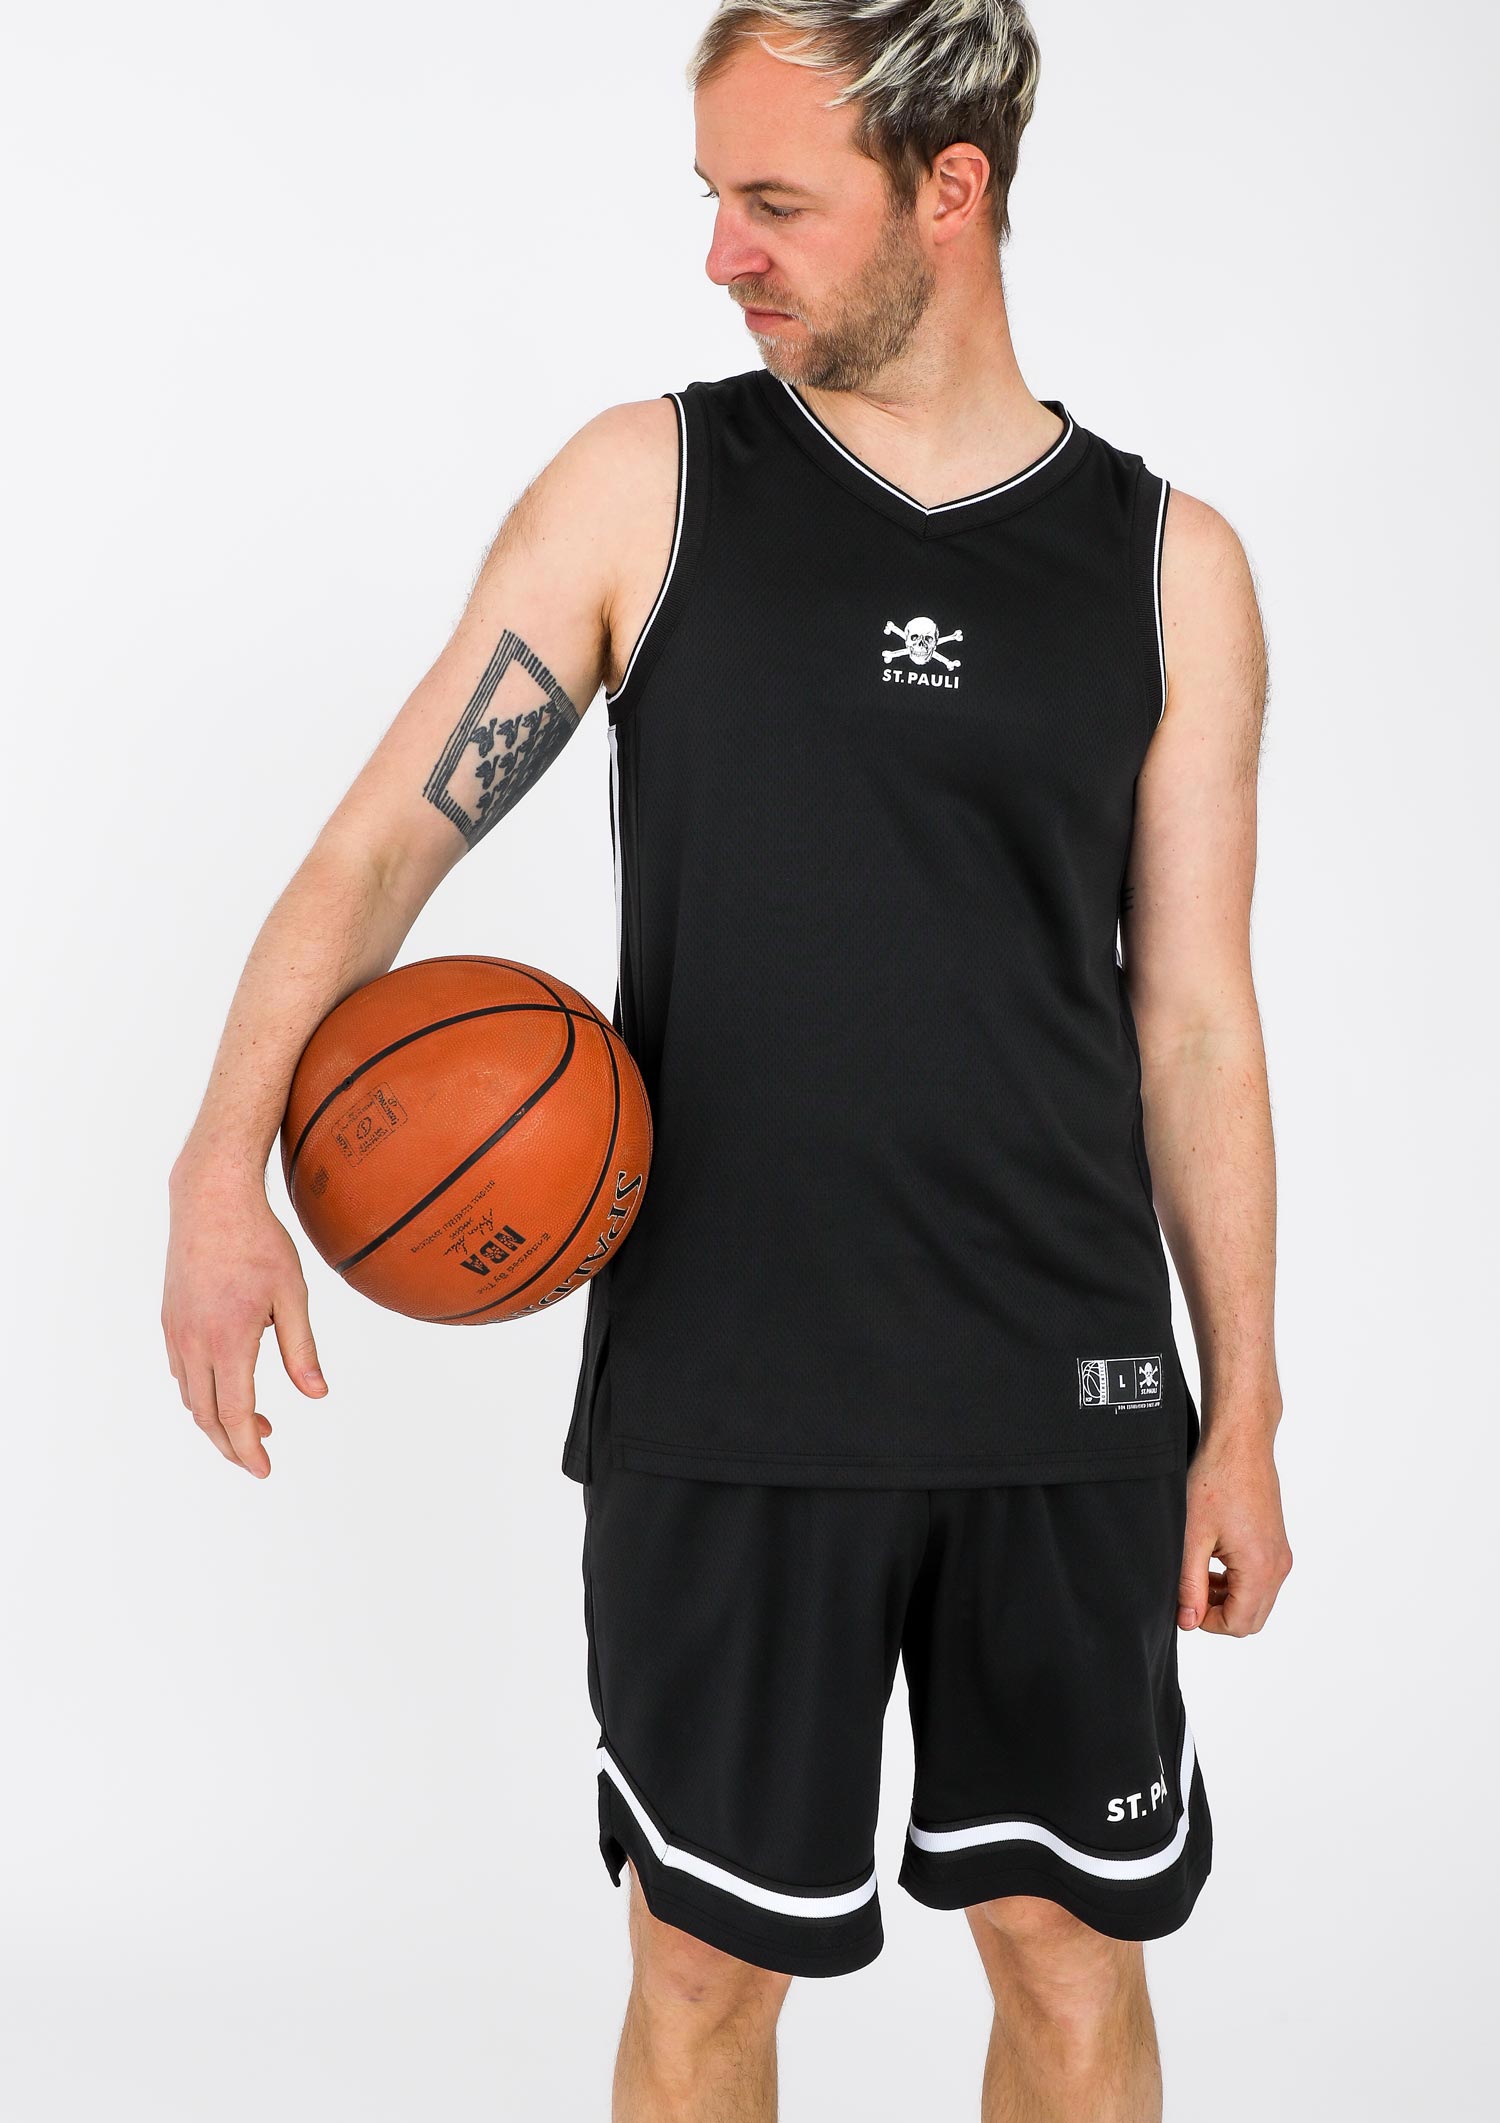 Basketball Trikot Totenkopf schwarz